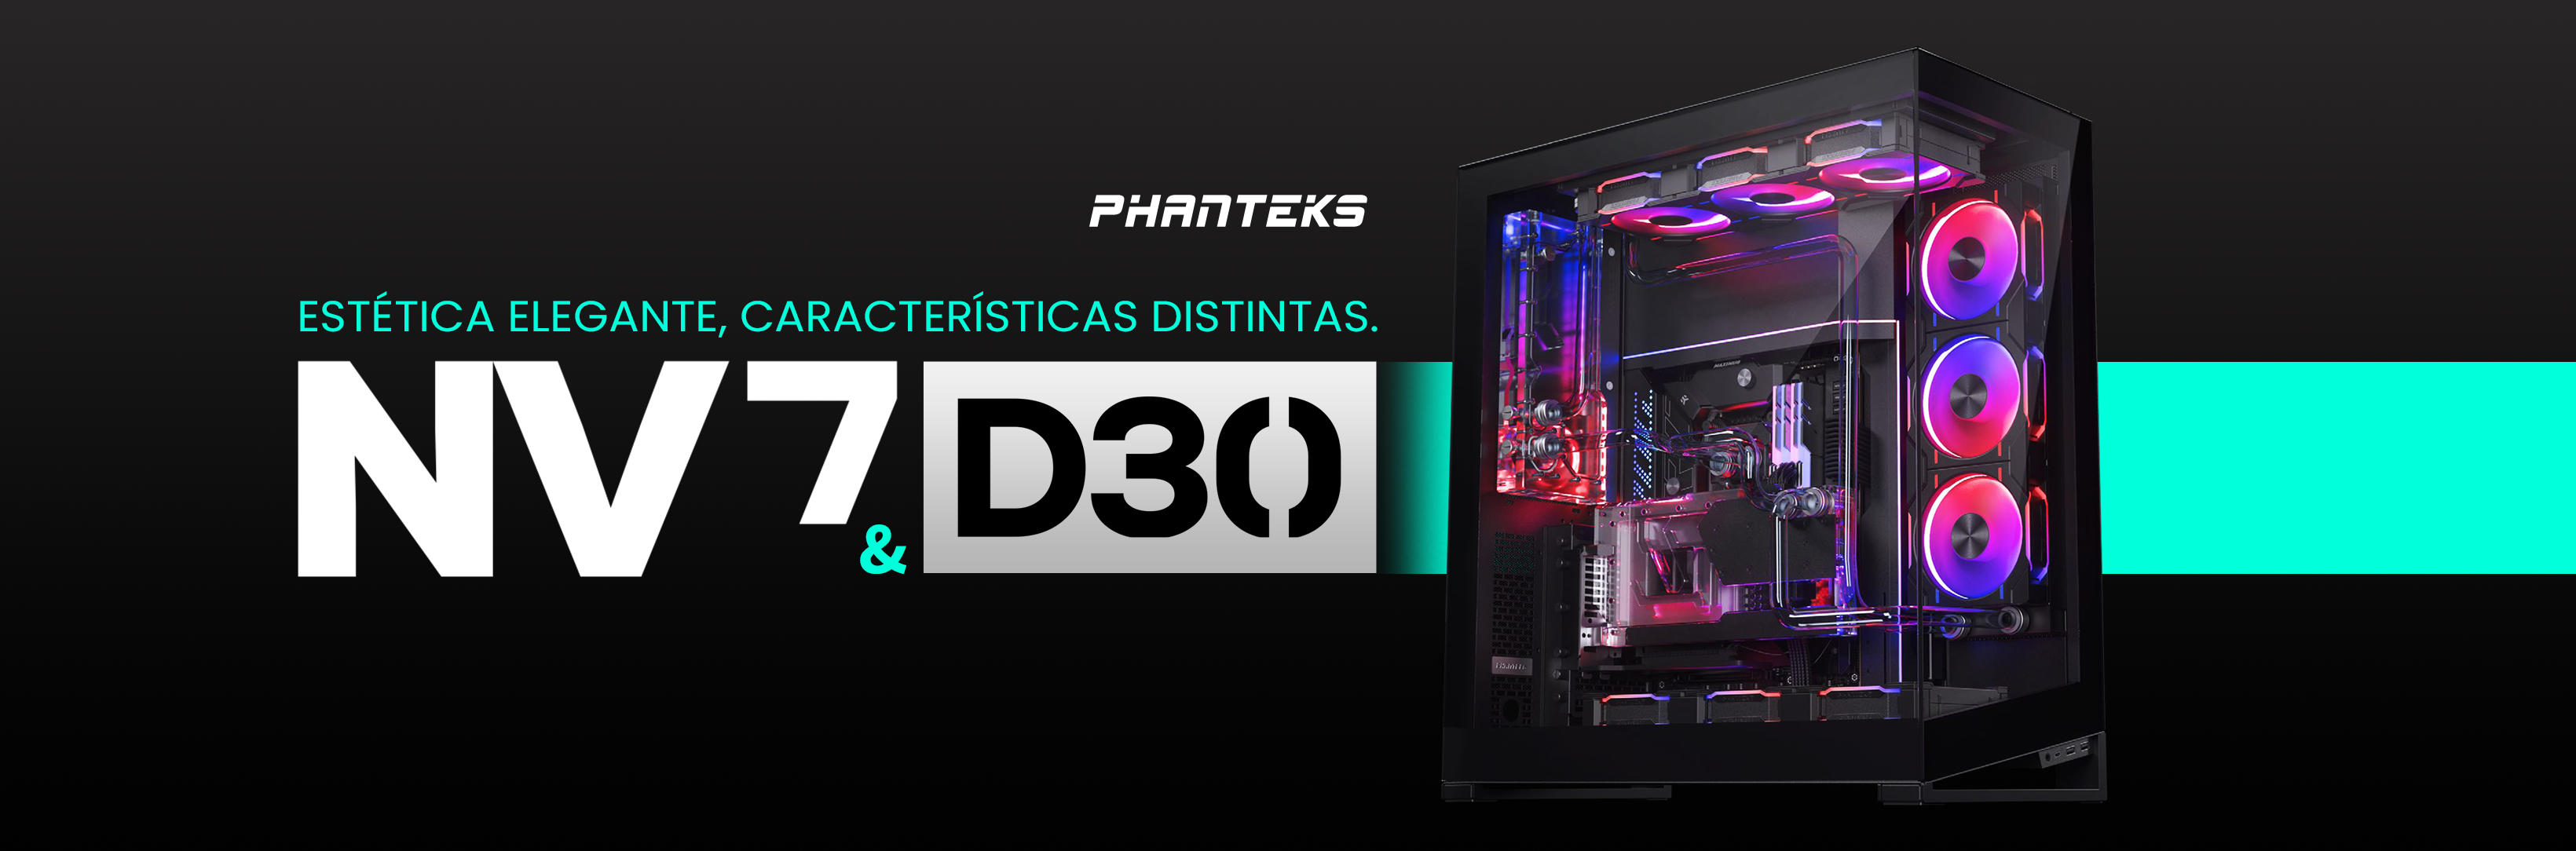 Phanteks NV7 + Ventoinhas D30